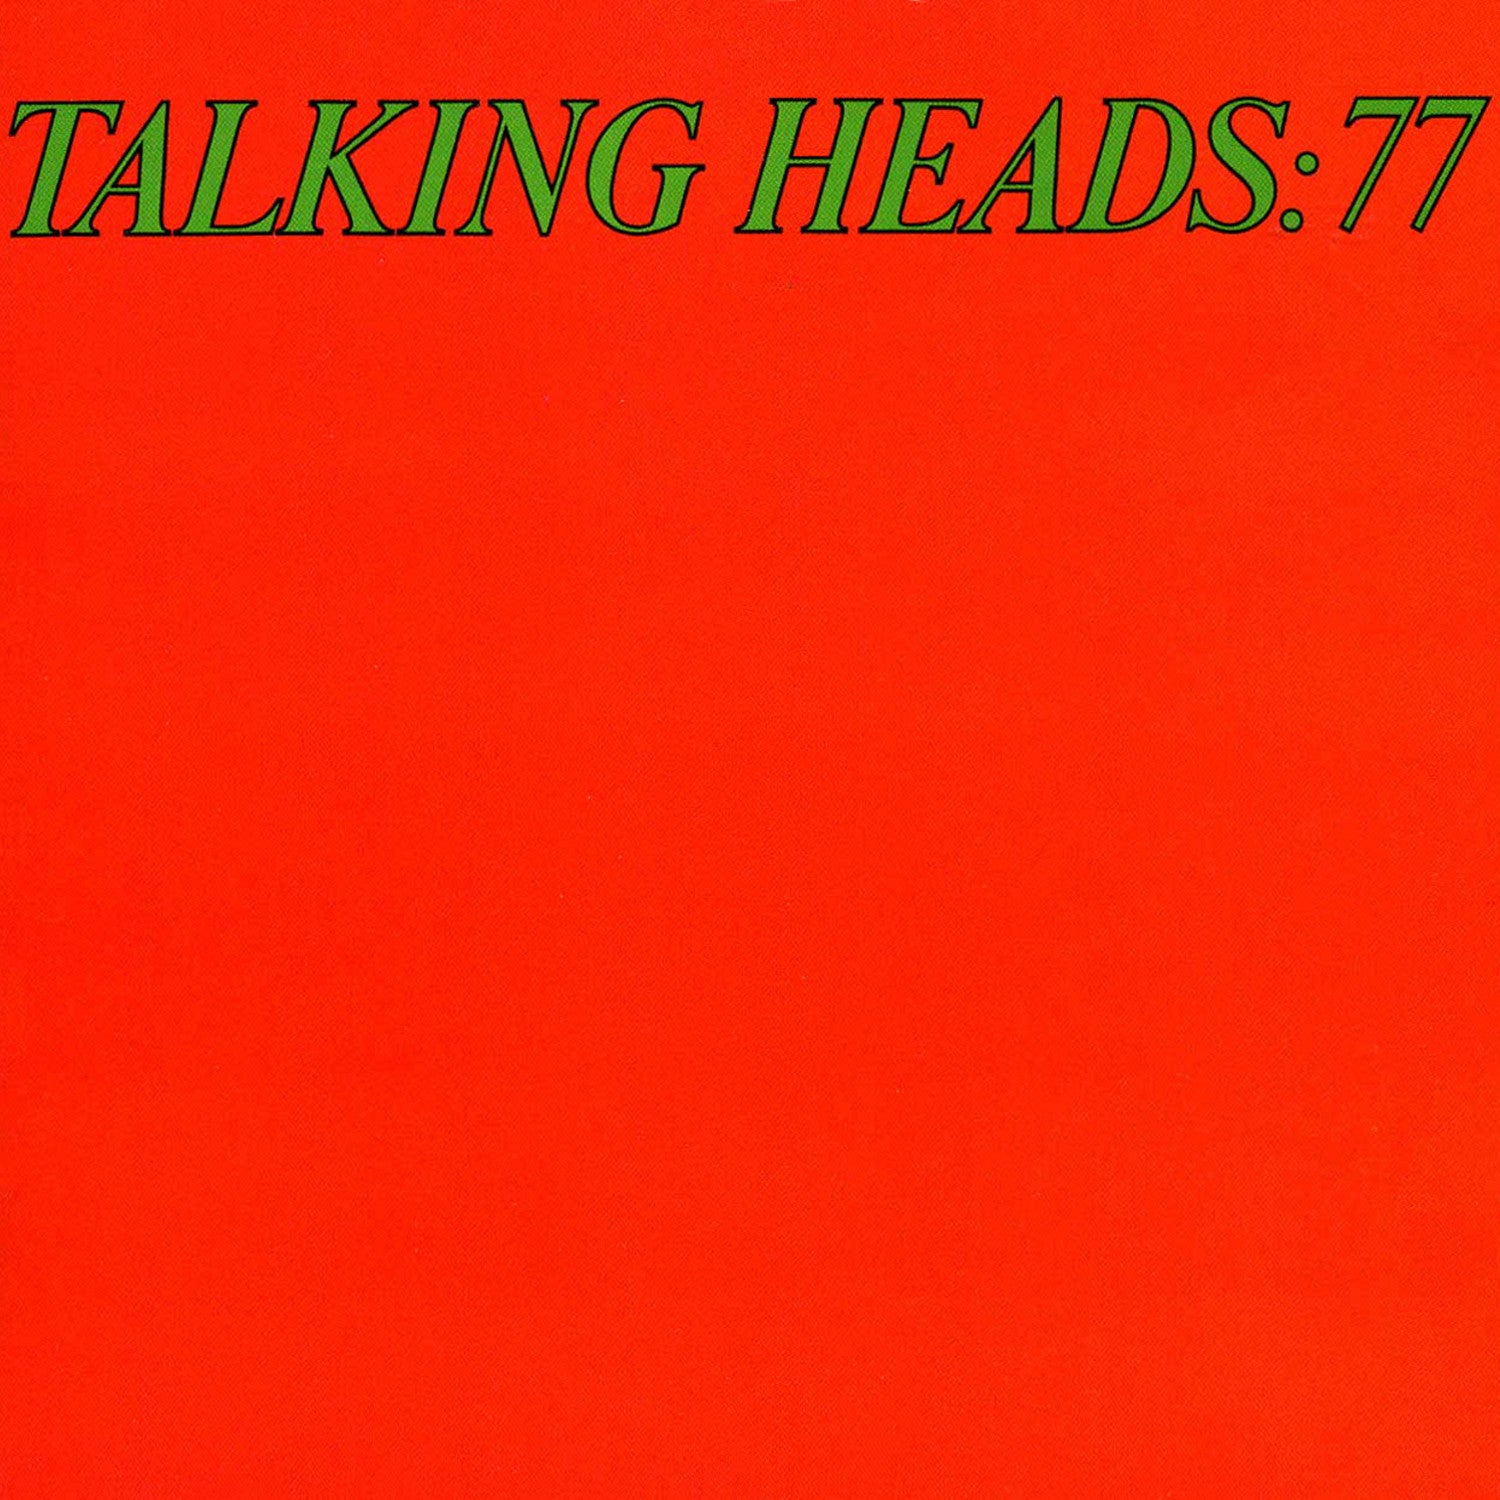 Talking Heads - 77 (Vinyl LP Record)